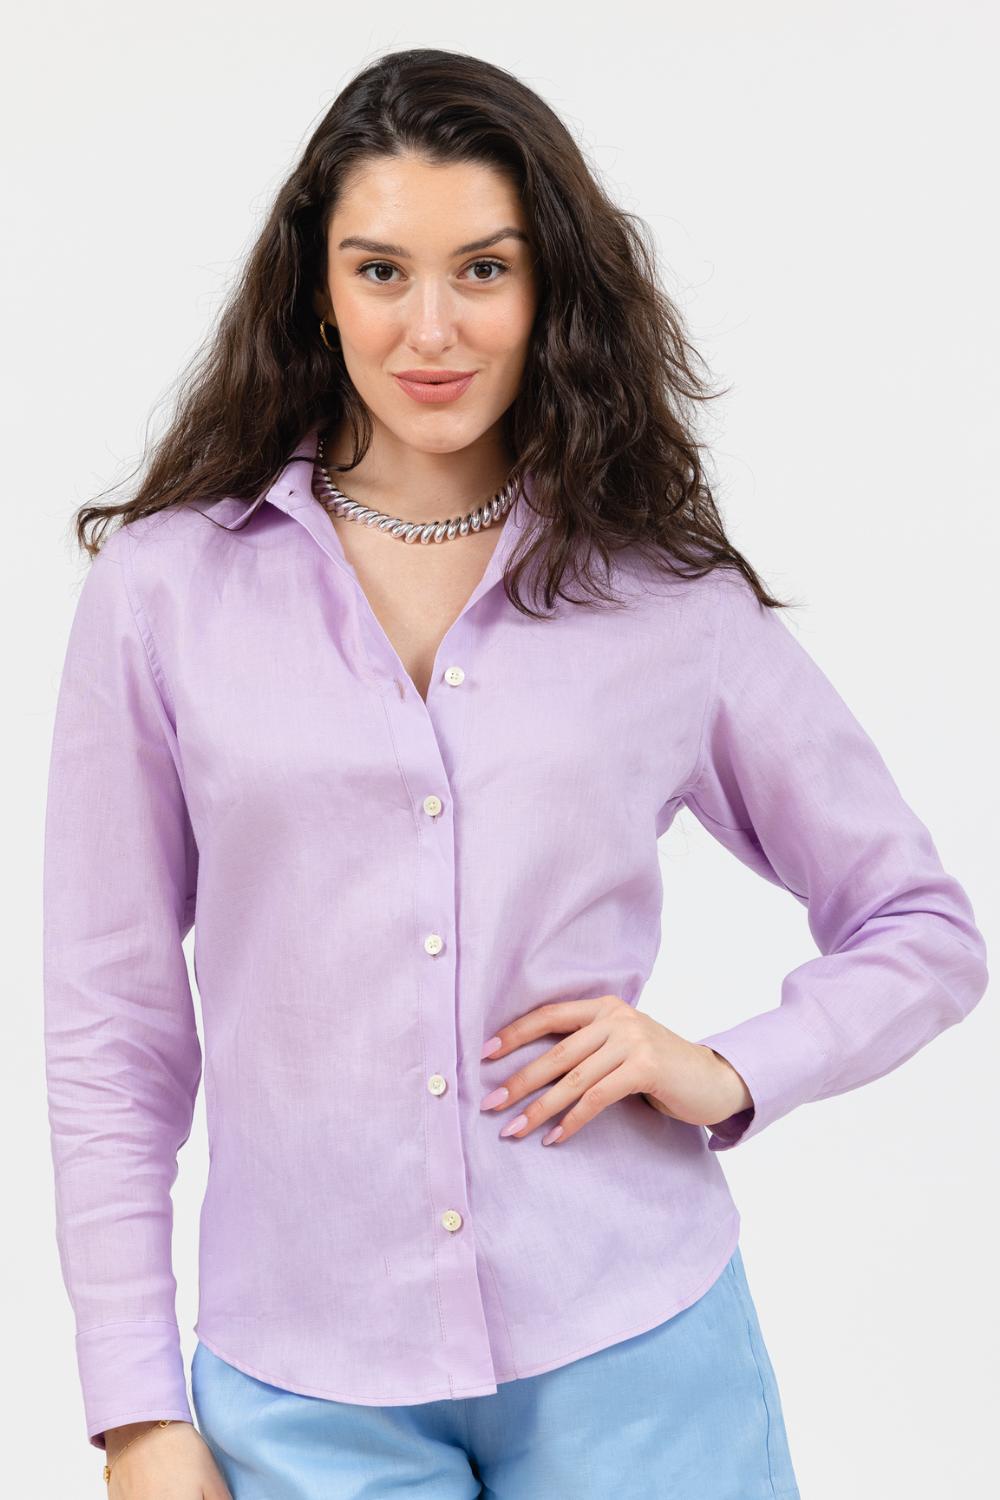 Malta Linen Button-Up - Lavender